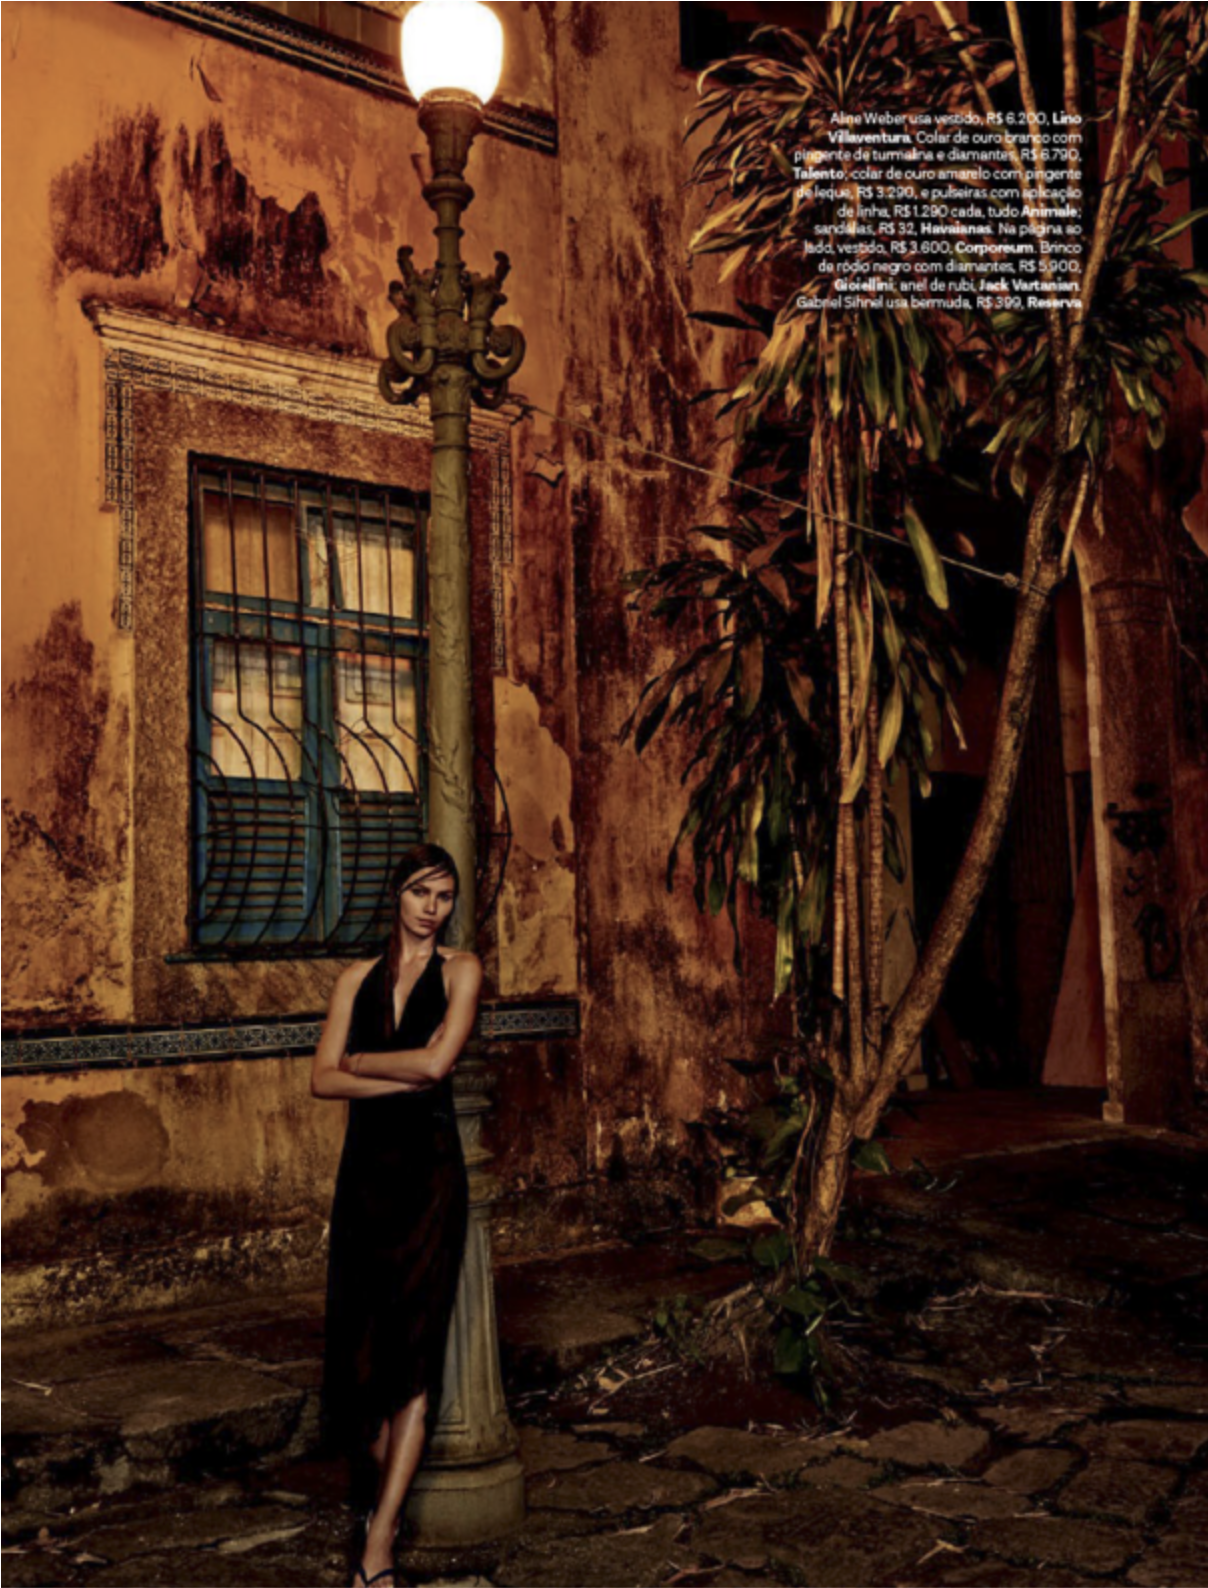 Amanda-Wellsh-Aline Weber in 'Rio Boêmio' By Giampaolo-Sgura-For- Vogue-Brazil-November- 2014-7.png